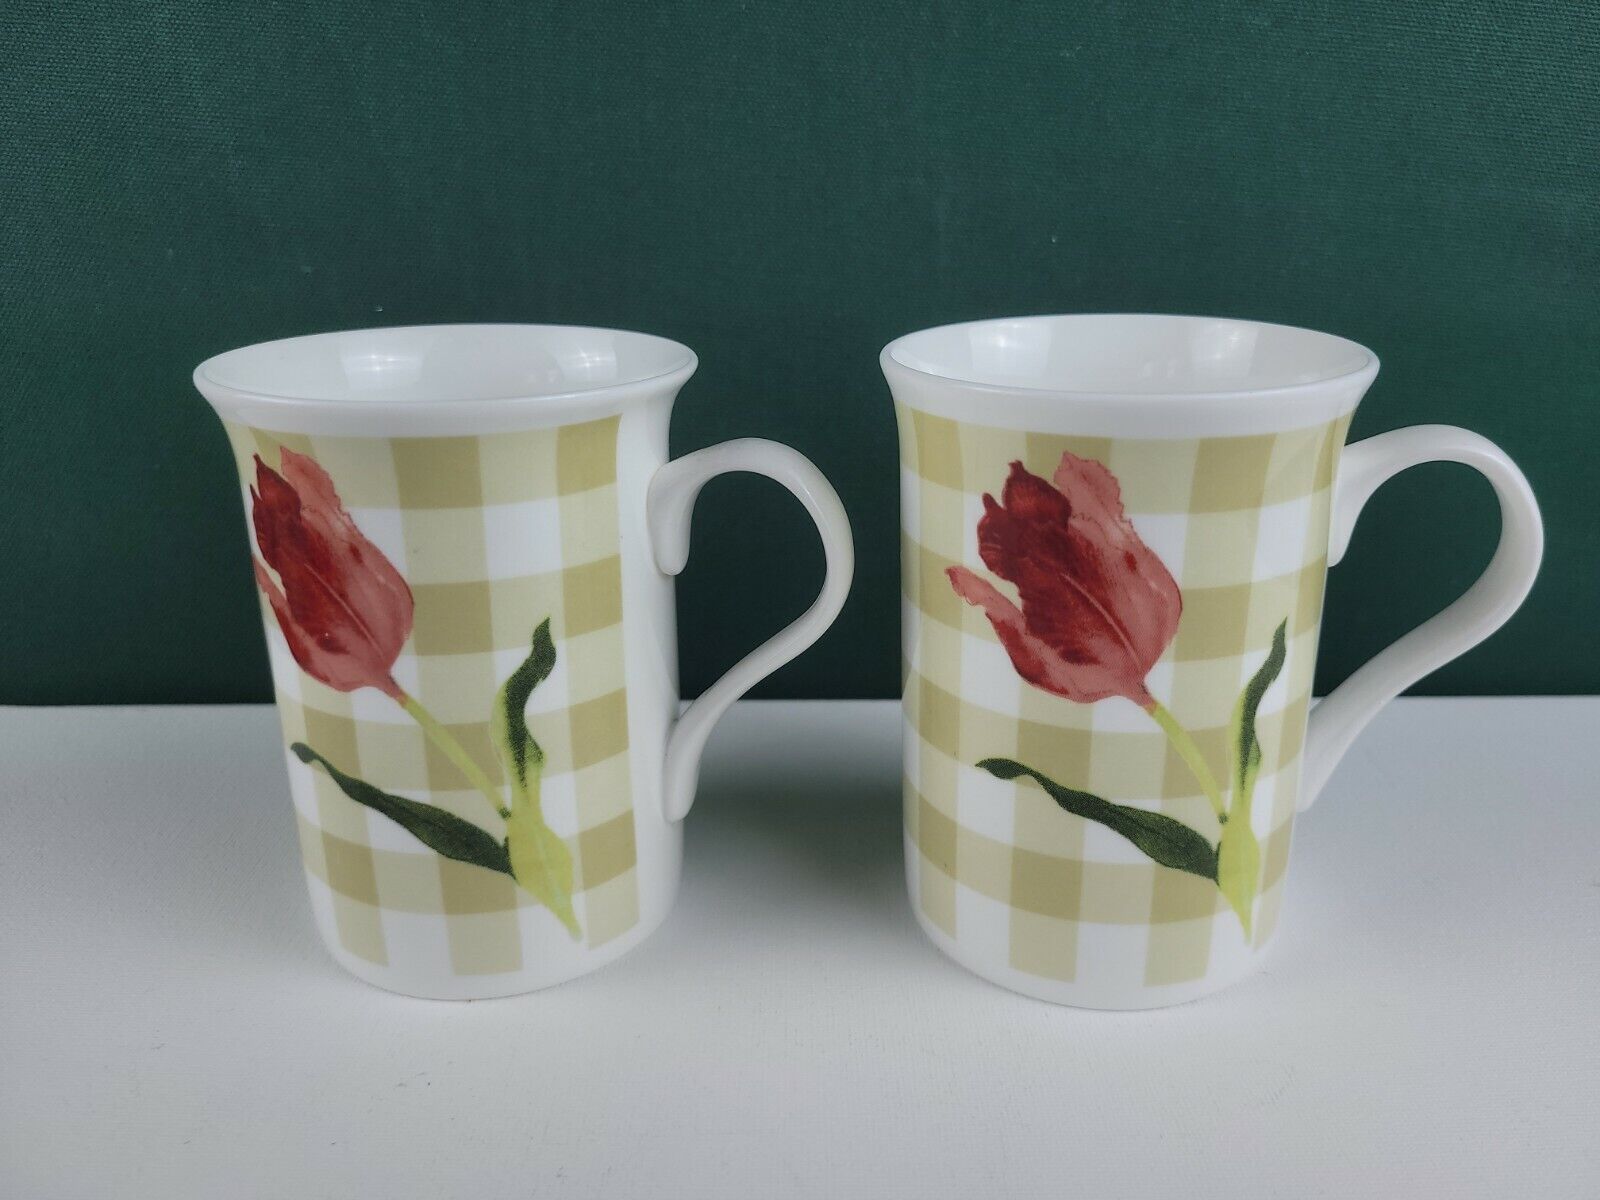 The National Trust - Country Check - Mug Set of 2, Tulips, Bone China, England